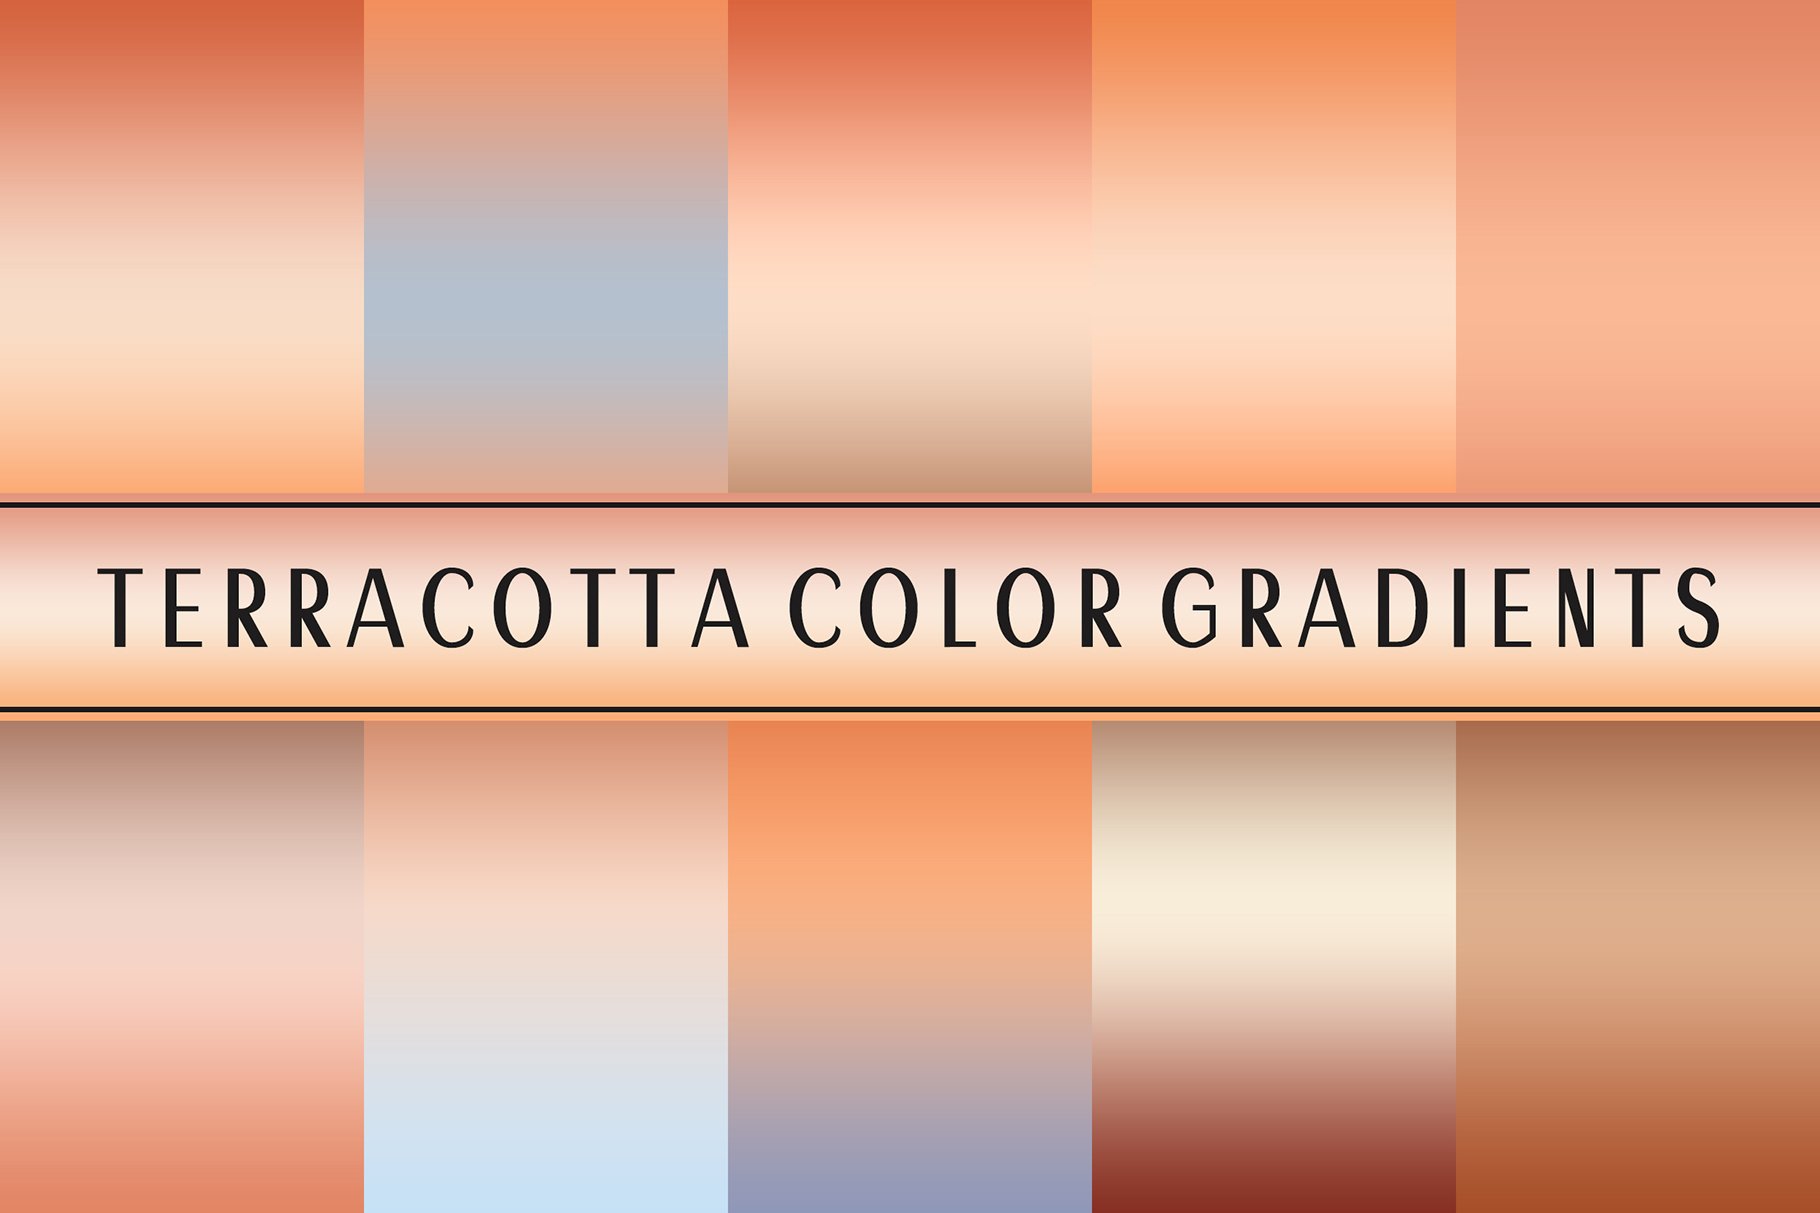 Terracotta Color Gradients cover image.